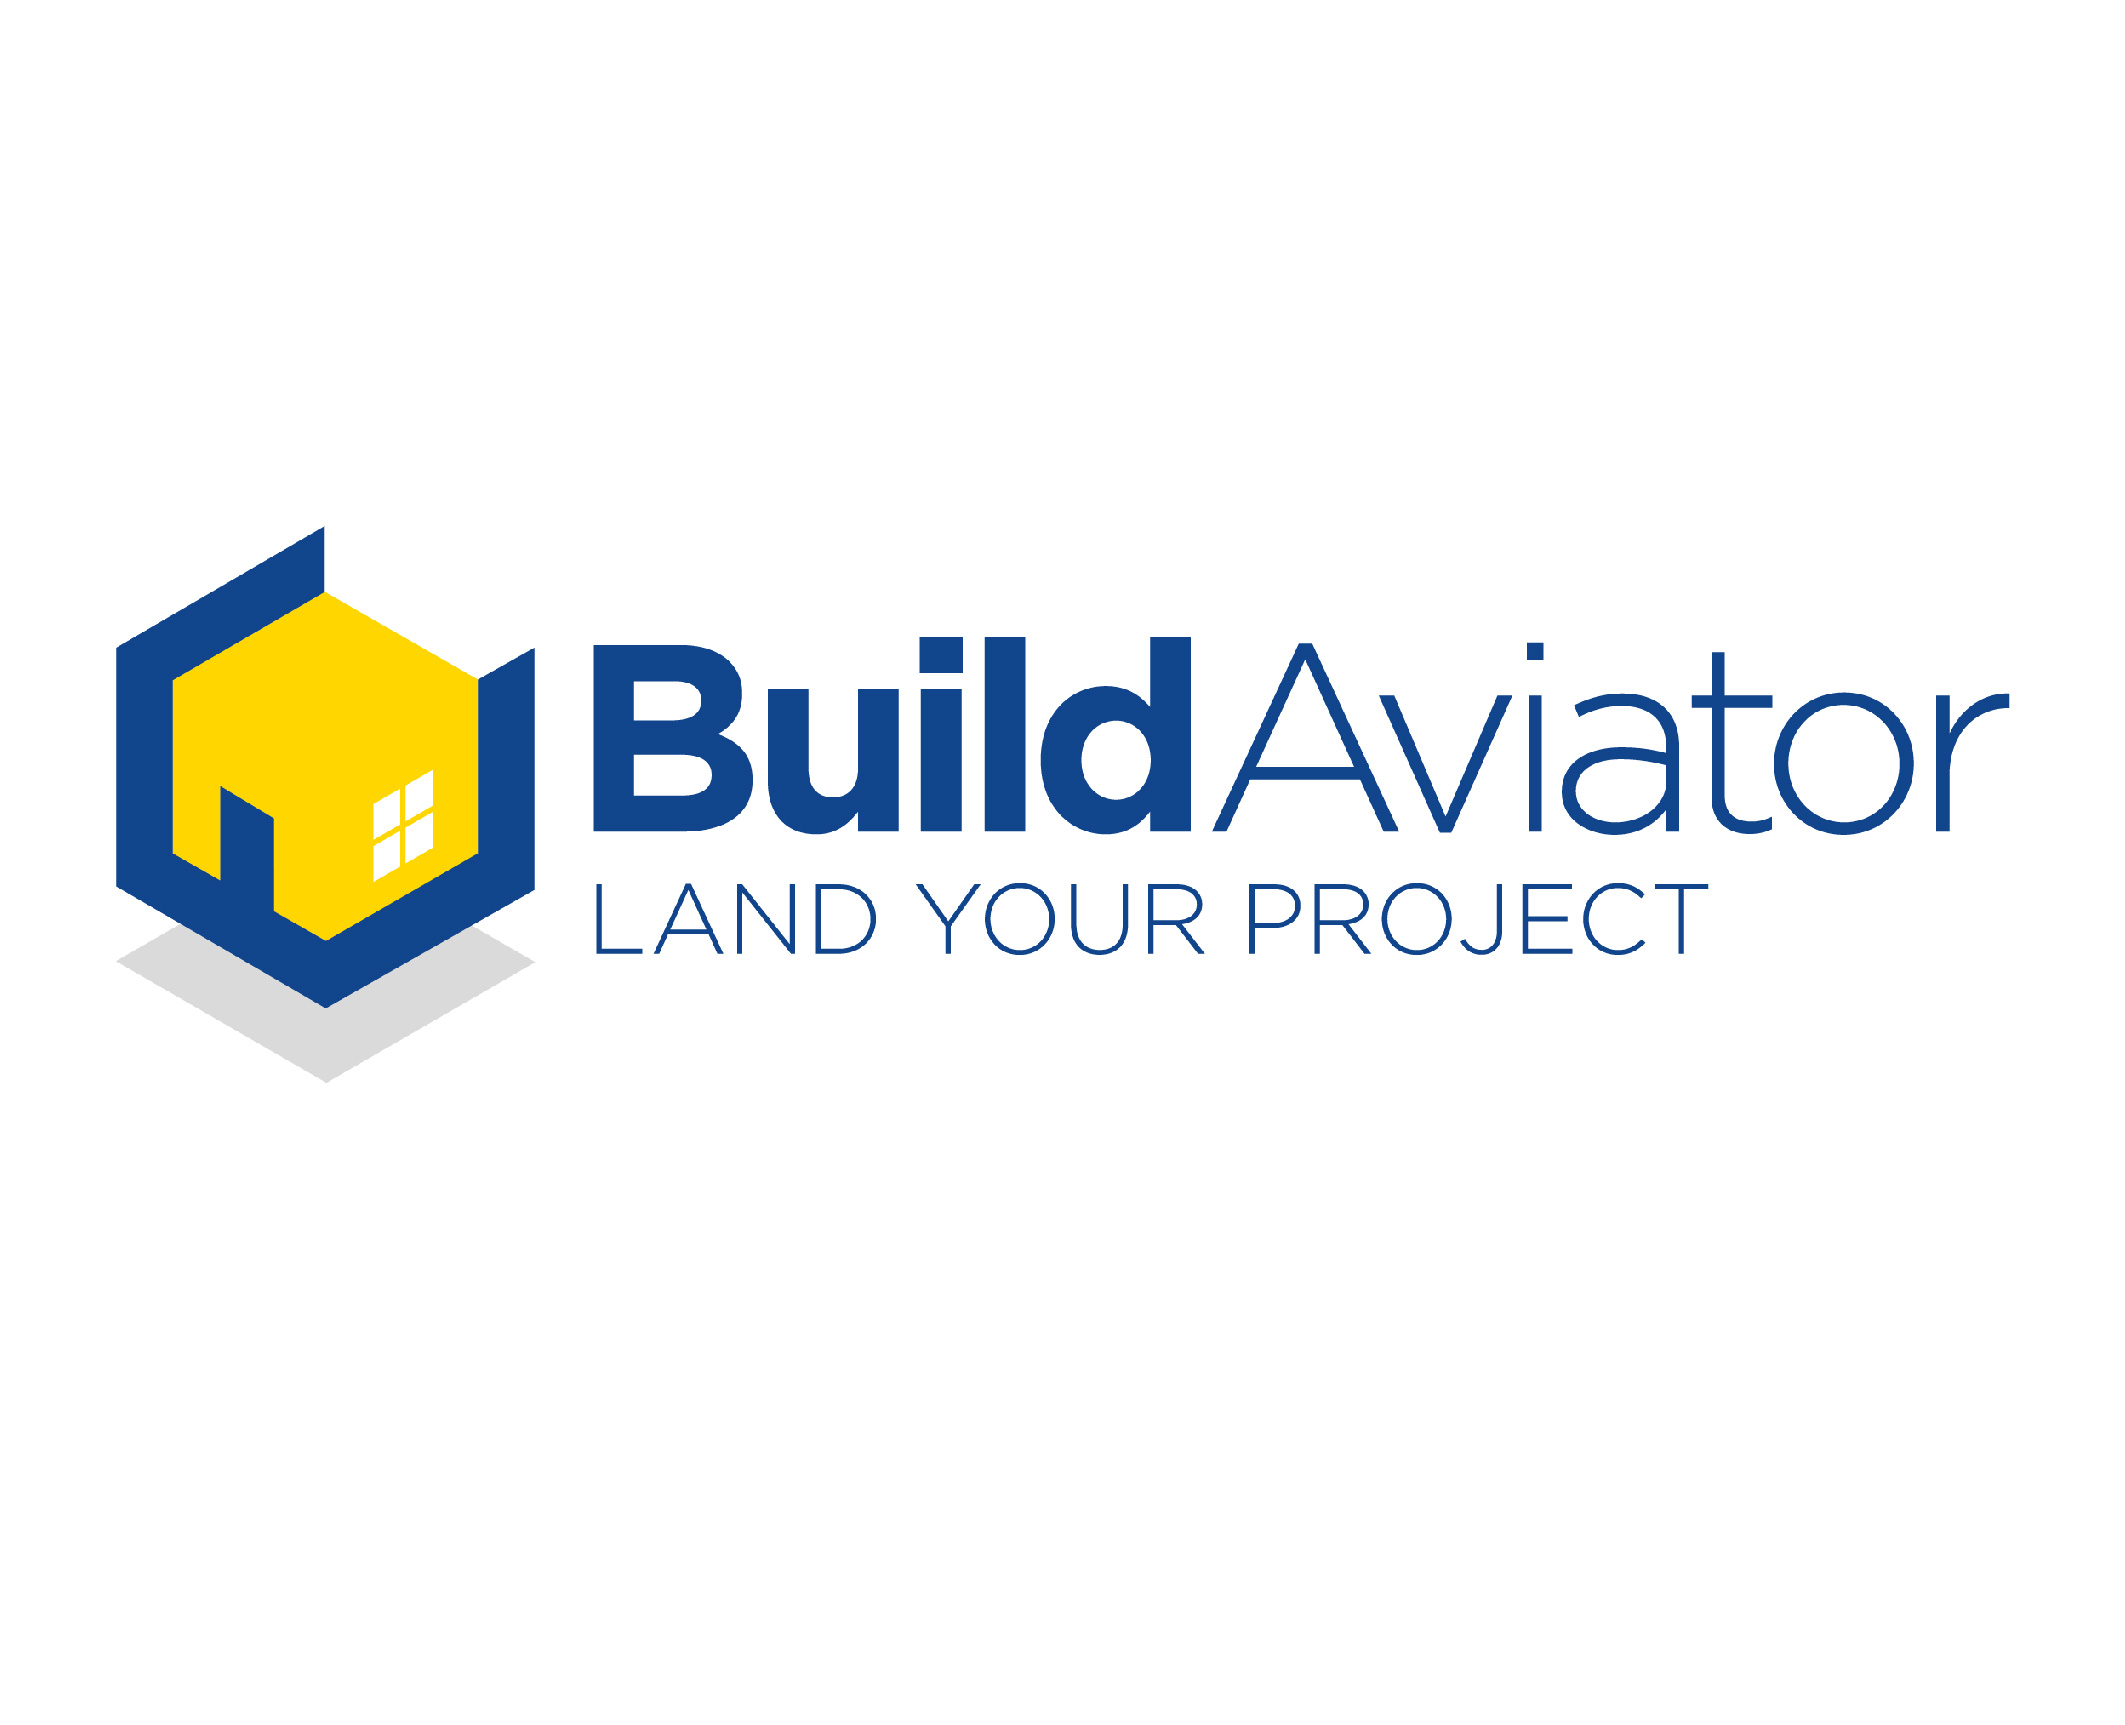 Build Aviator